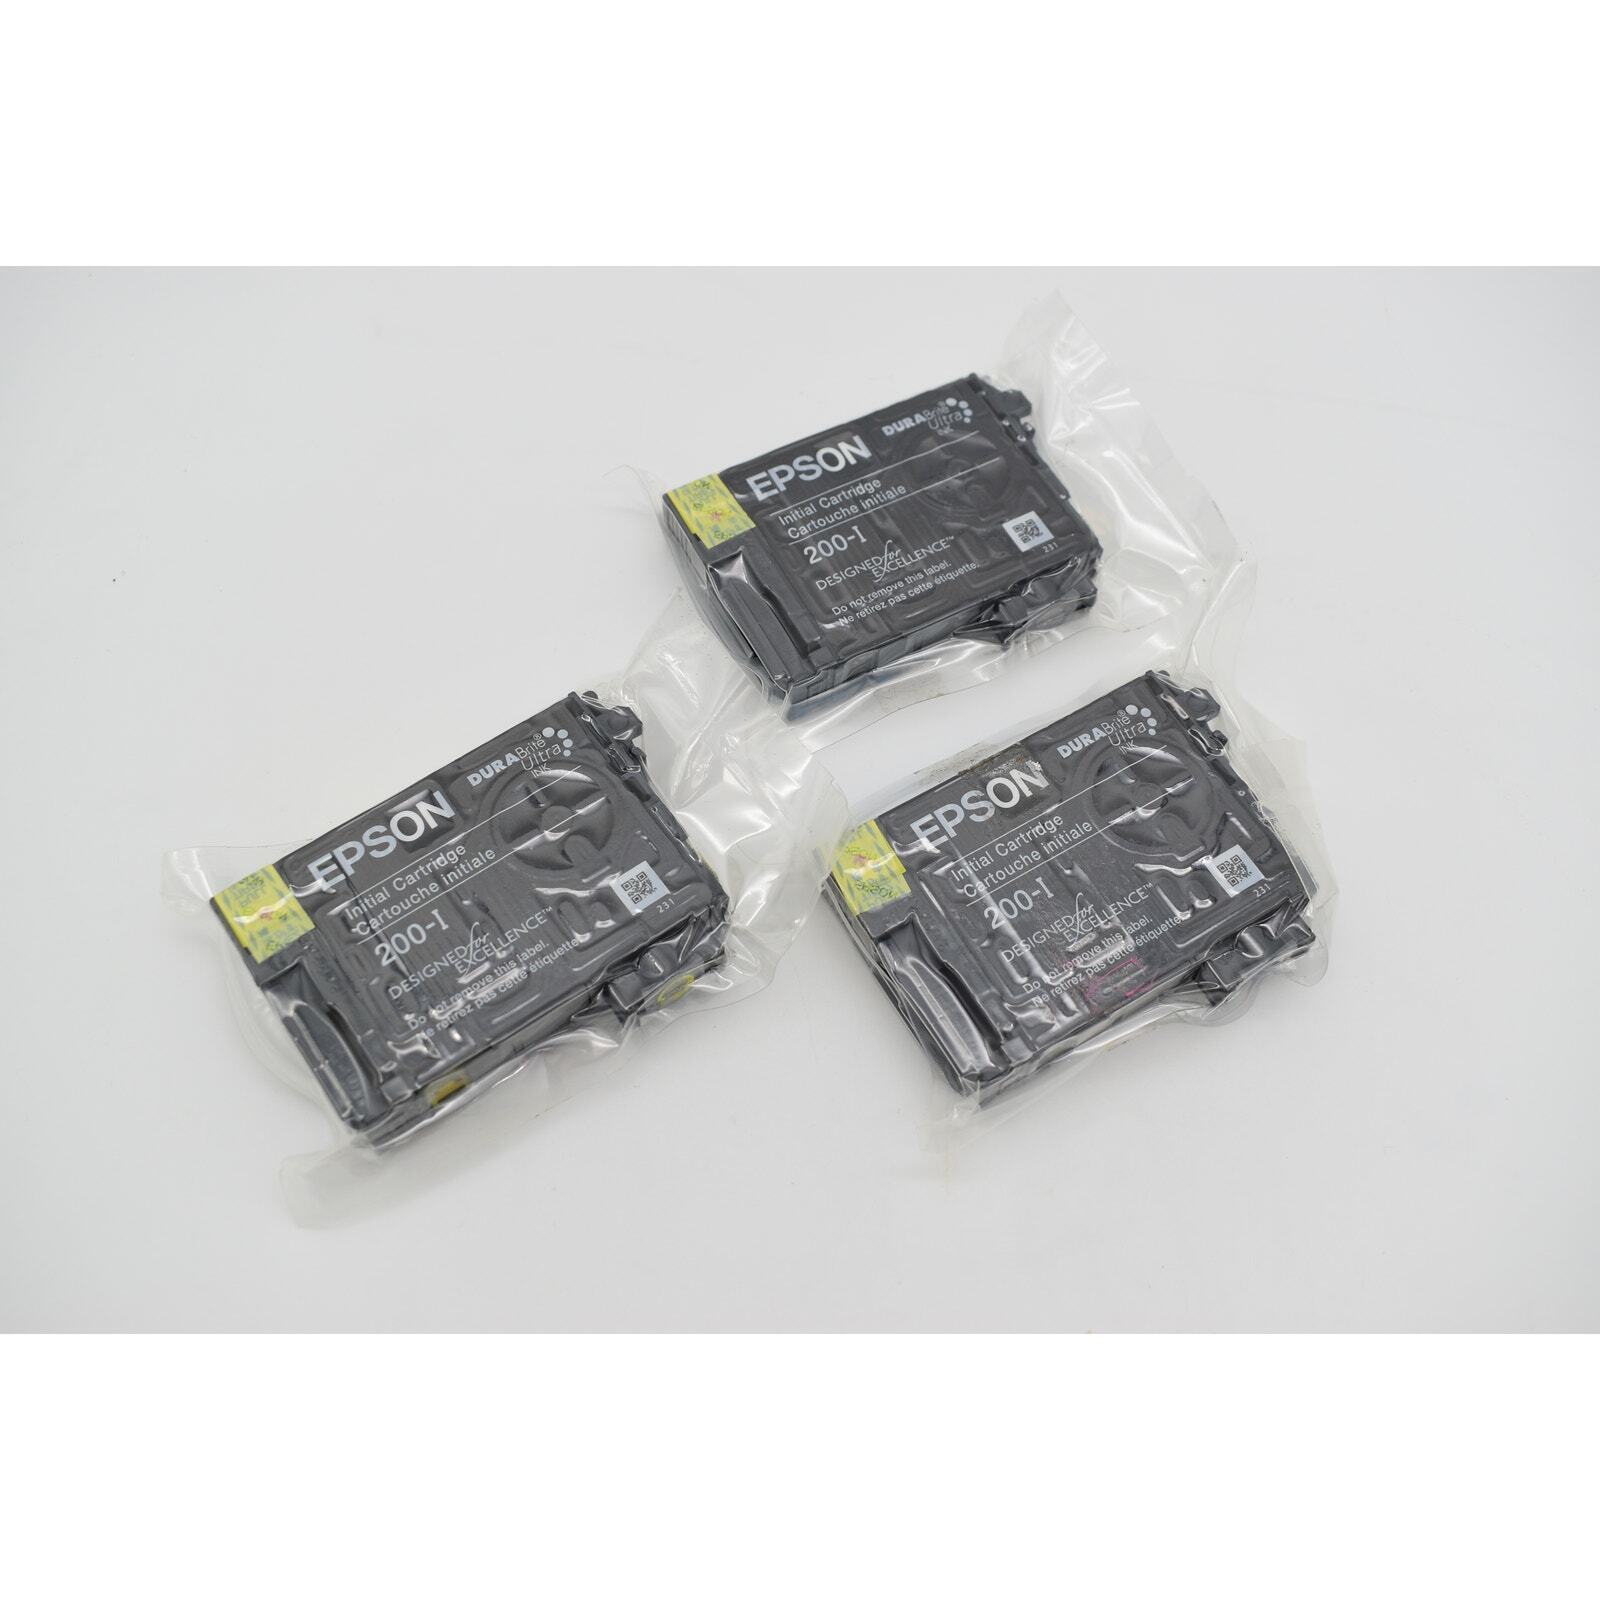 OEM Epson 200-I DuraBrite Ultra 3-pack Ink Cartridges - Black, Cyan, Yellow -NEW